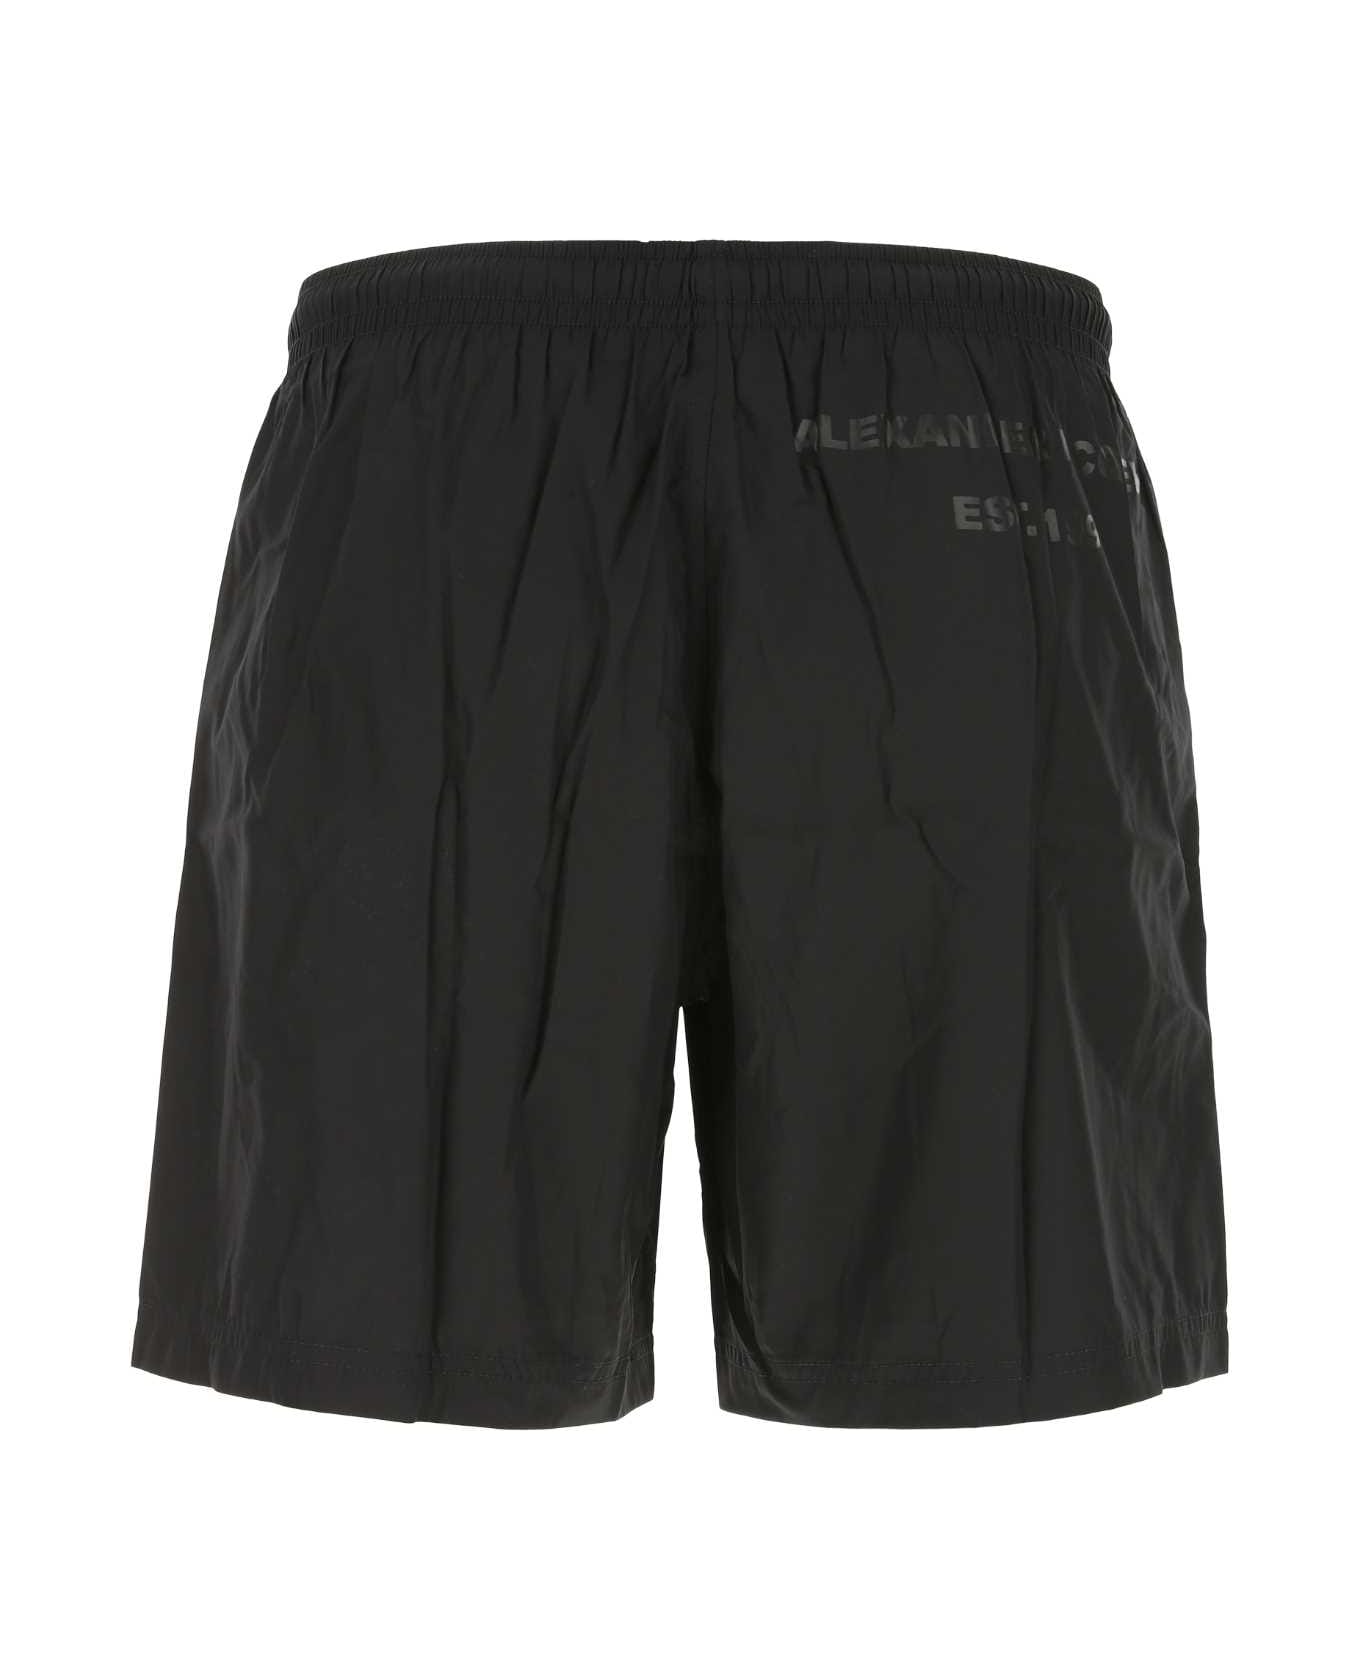 Alexander McQueen Black Nylon Swimming Shorts - 1060 水着